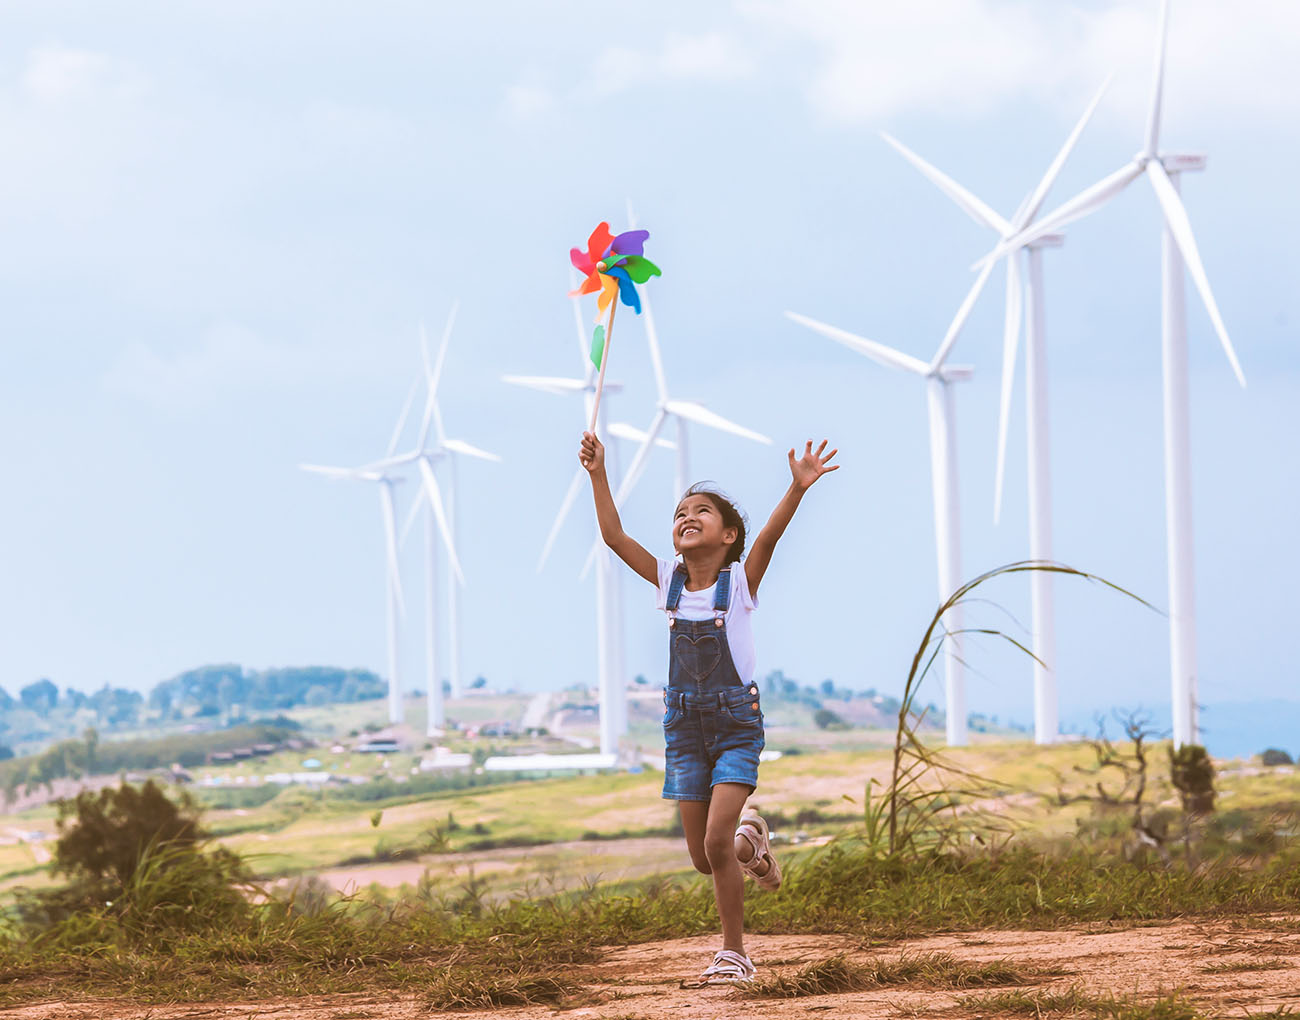 Challenge Statements 1 Wind Turbine Child - The Greentech Accelerator 2022